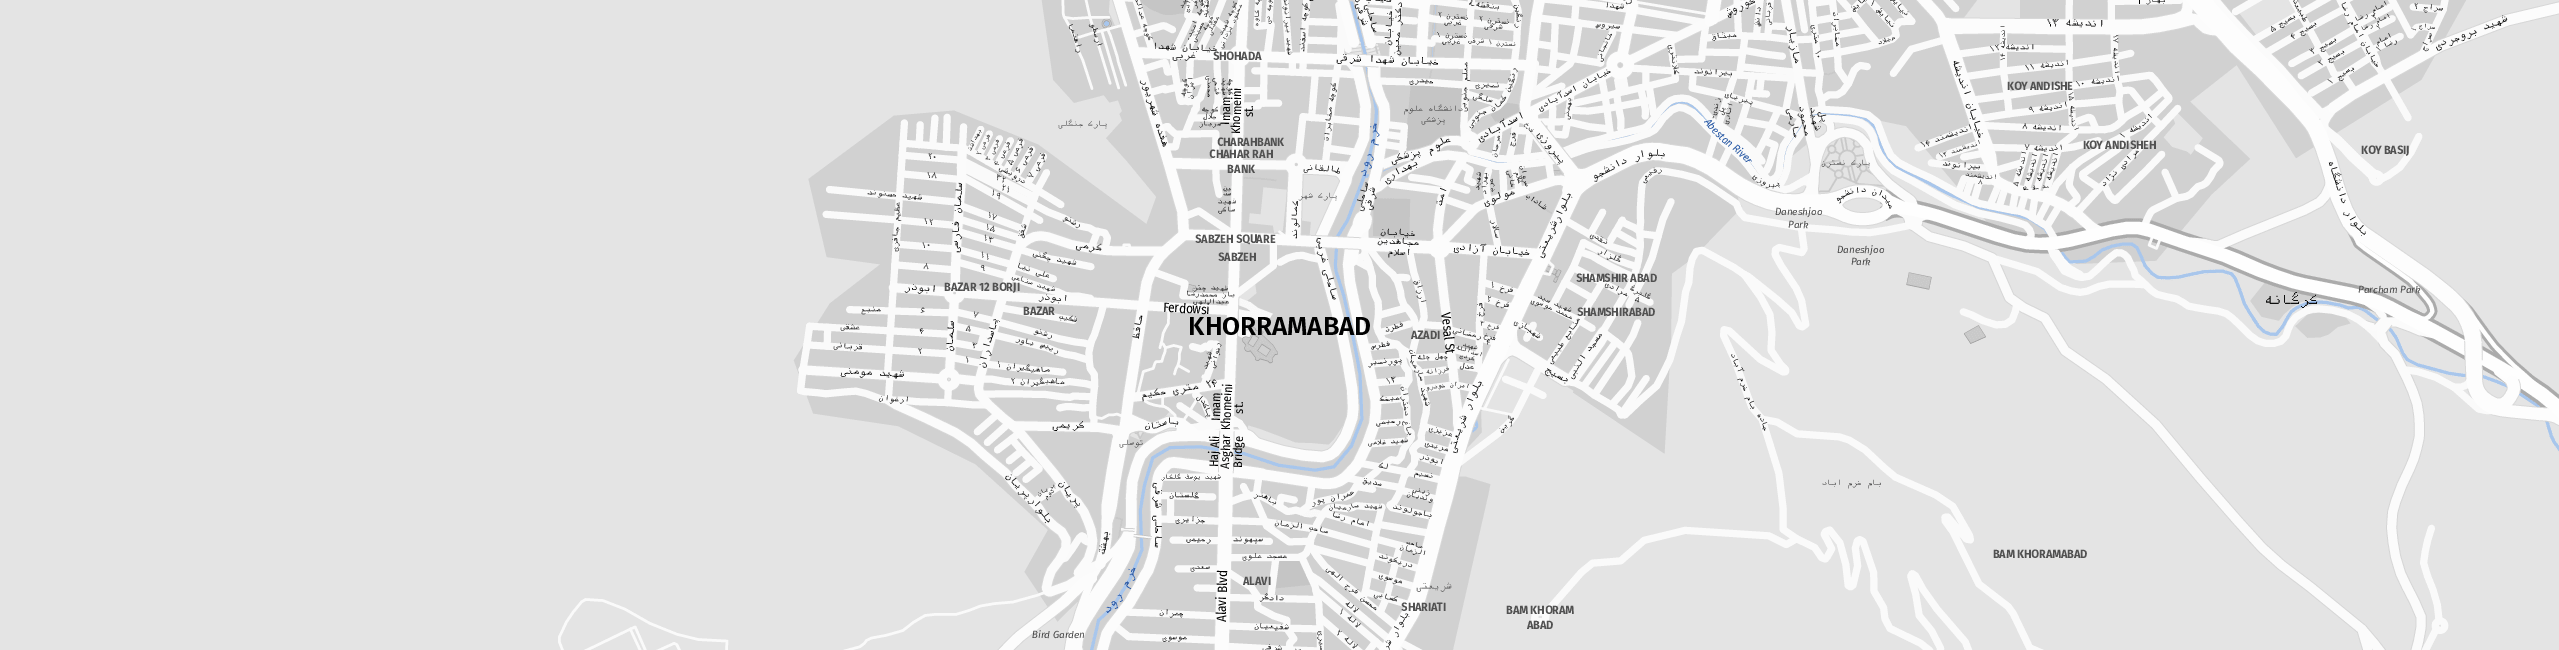 Stadtplan Chorramabad zum Downloaden.